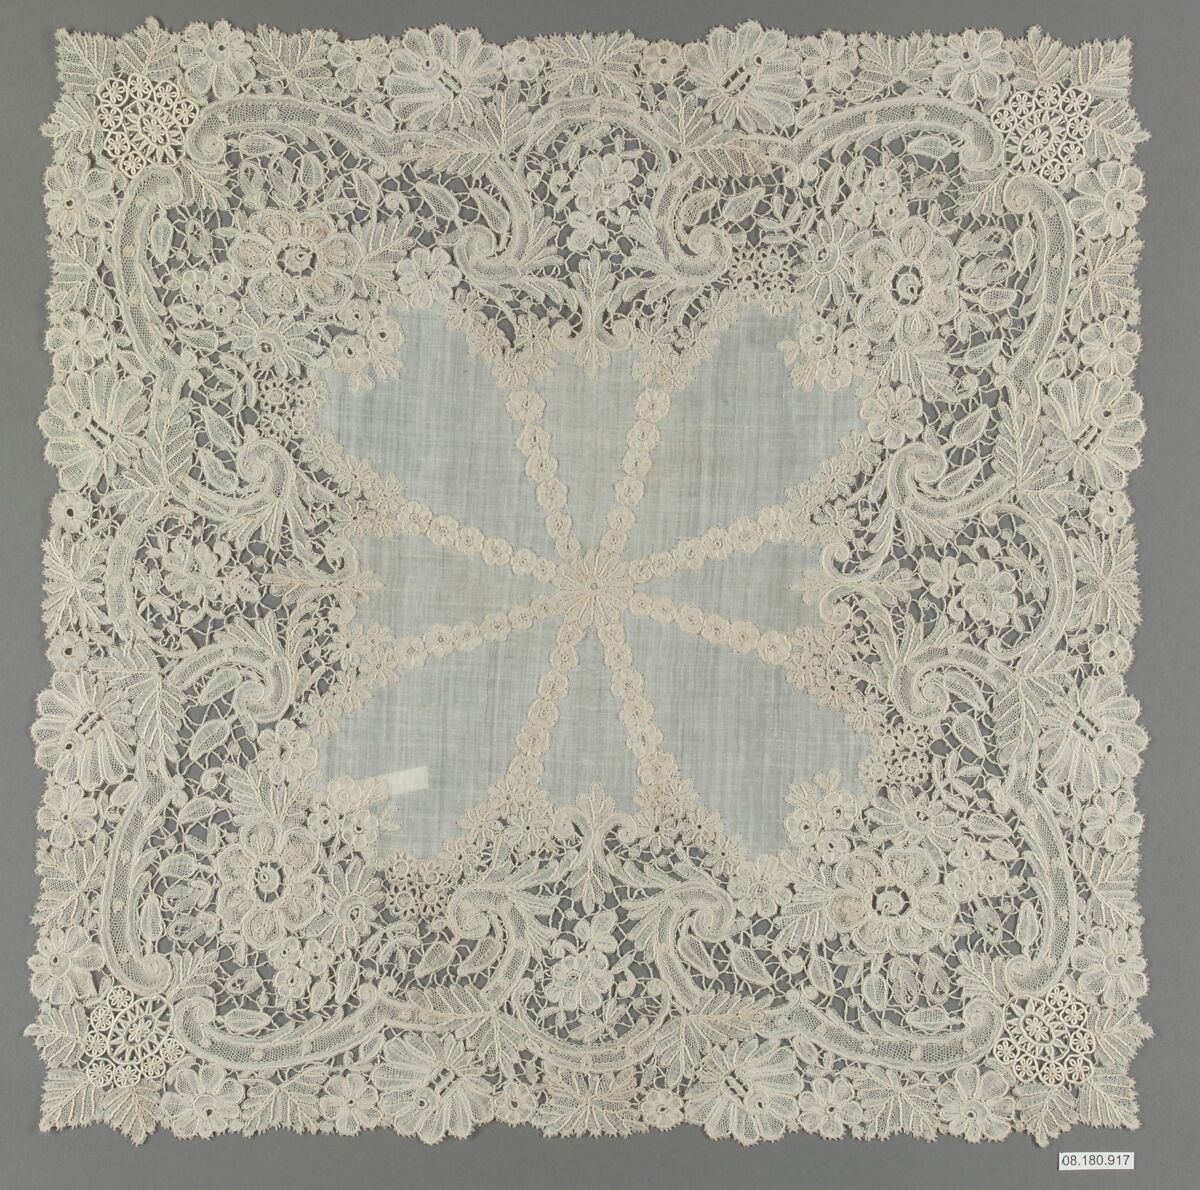 Handkerchief, Bobbin lace, Duchesse lace, Belgian 